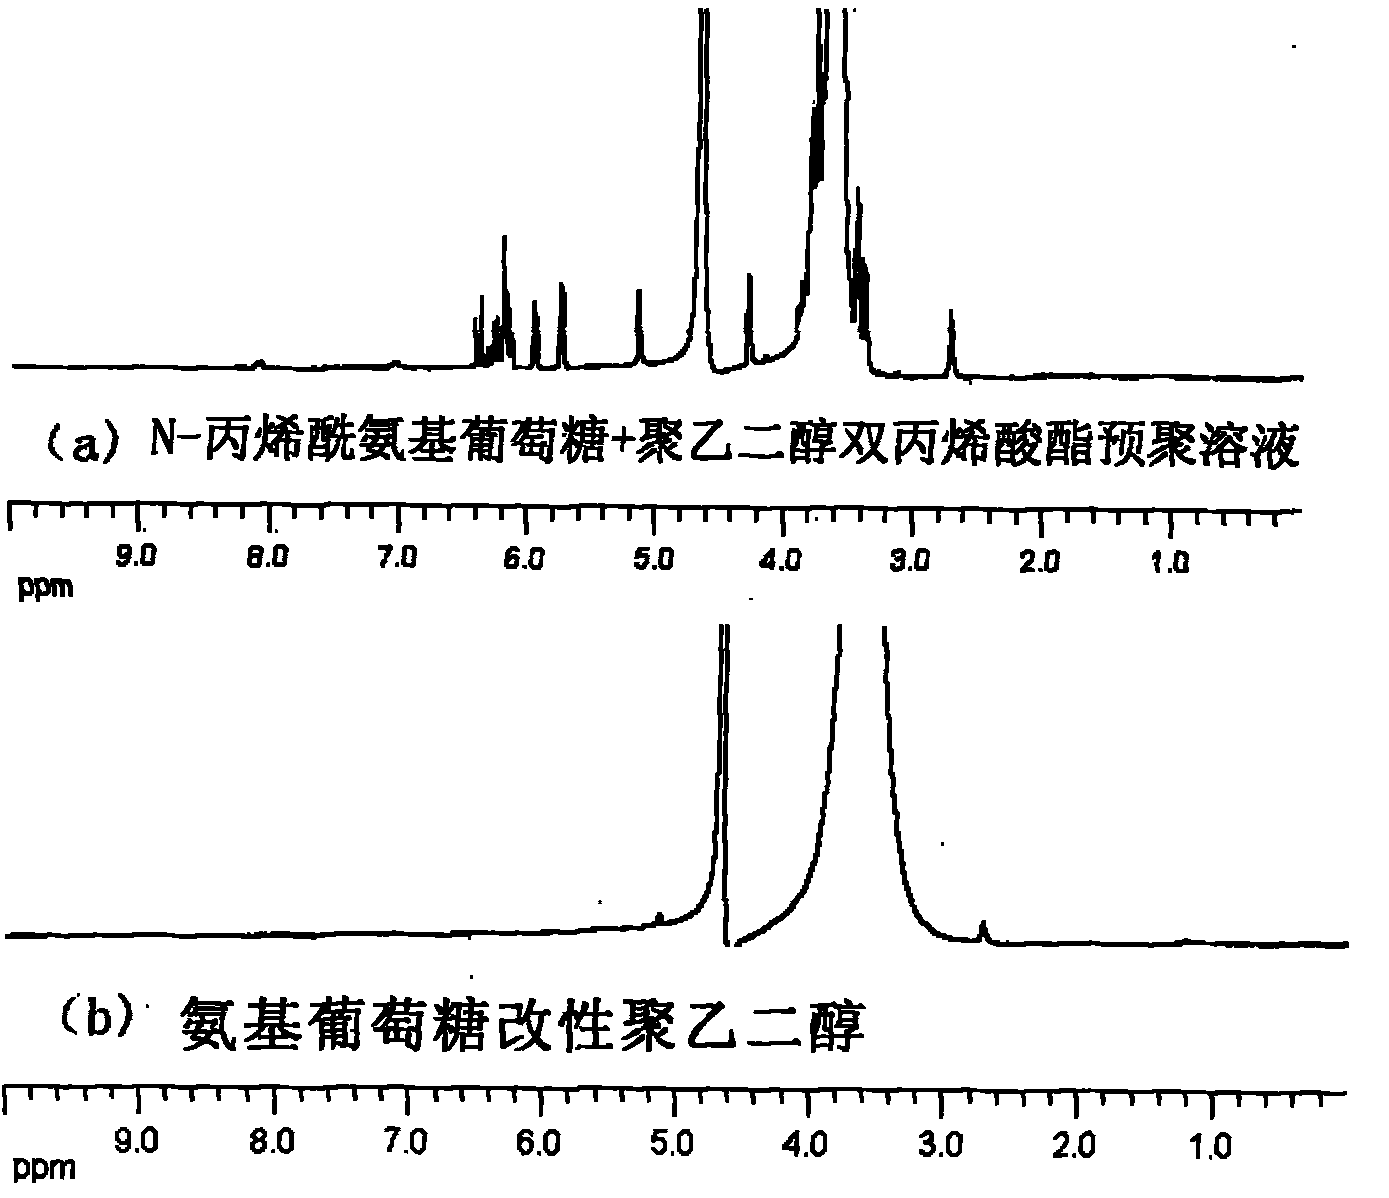 Glucosamine modified poly (ethylene glycol) diacrylate (PEGDA) hydrogel, preparation method and application thereof